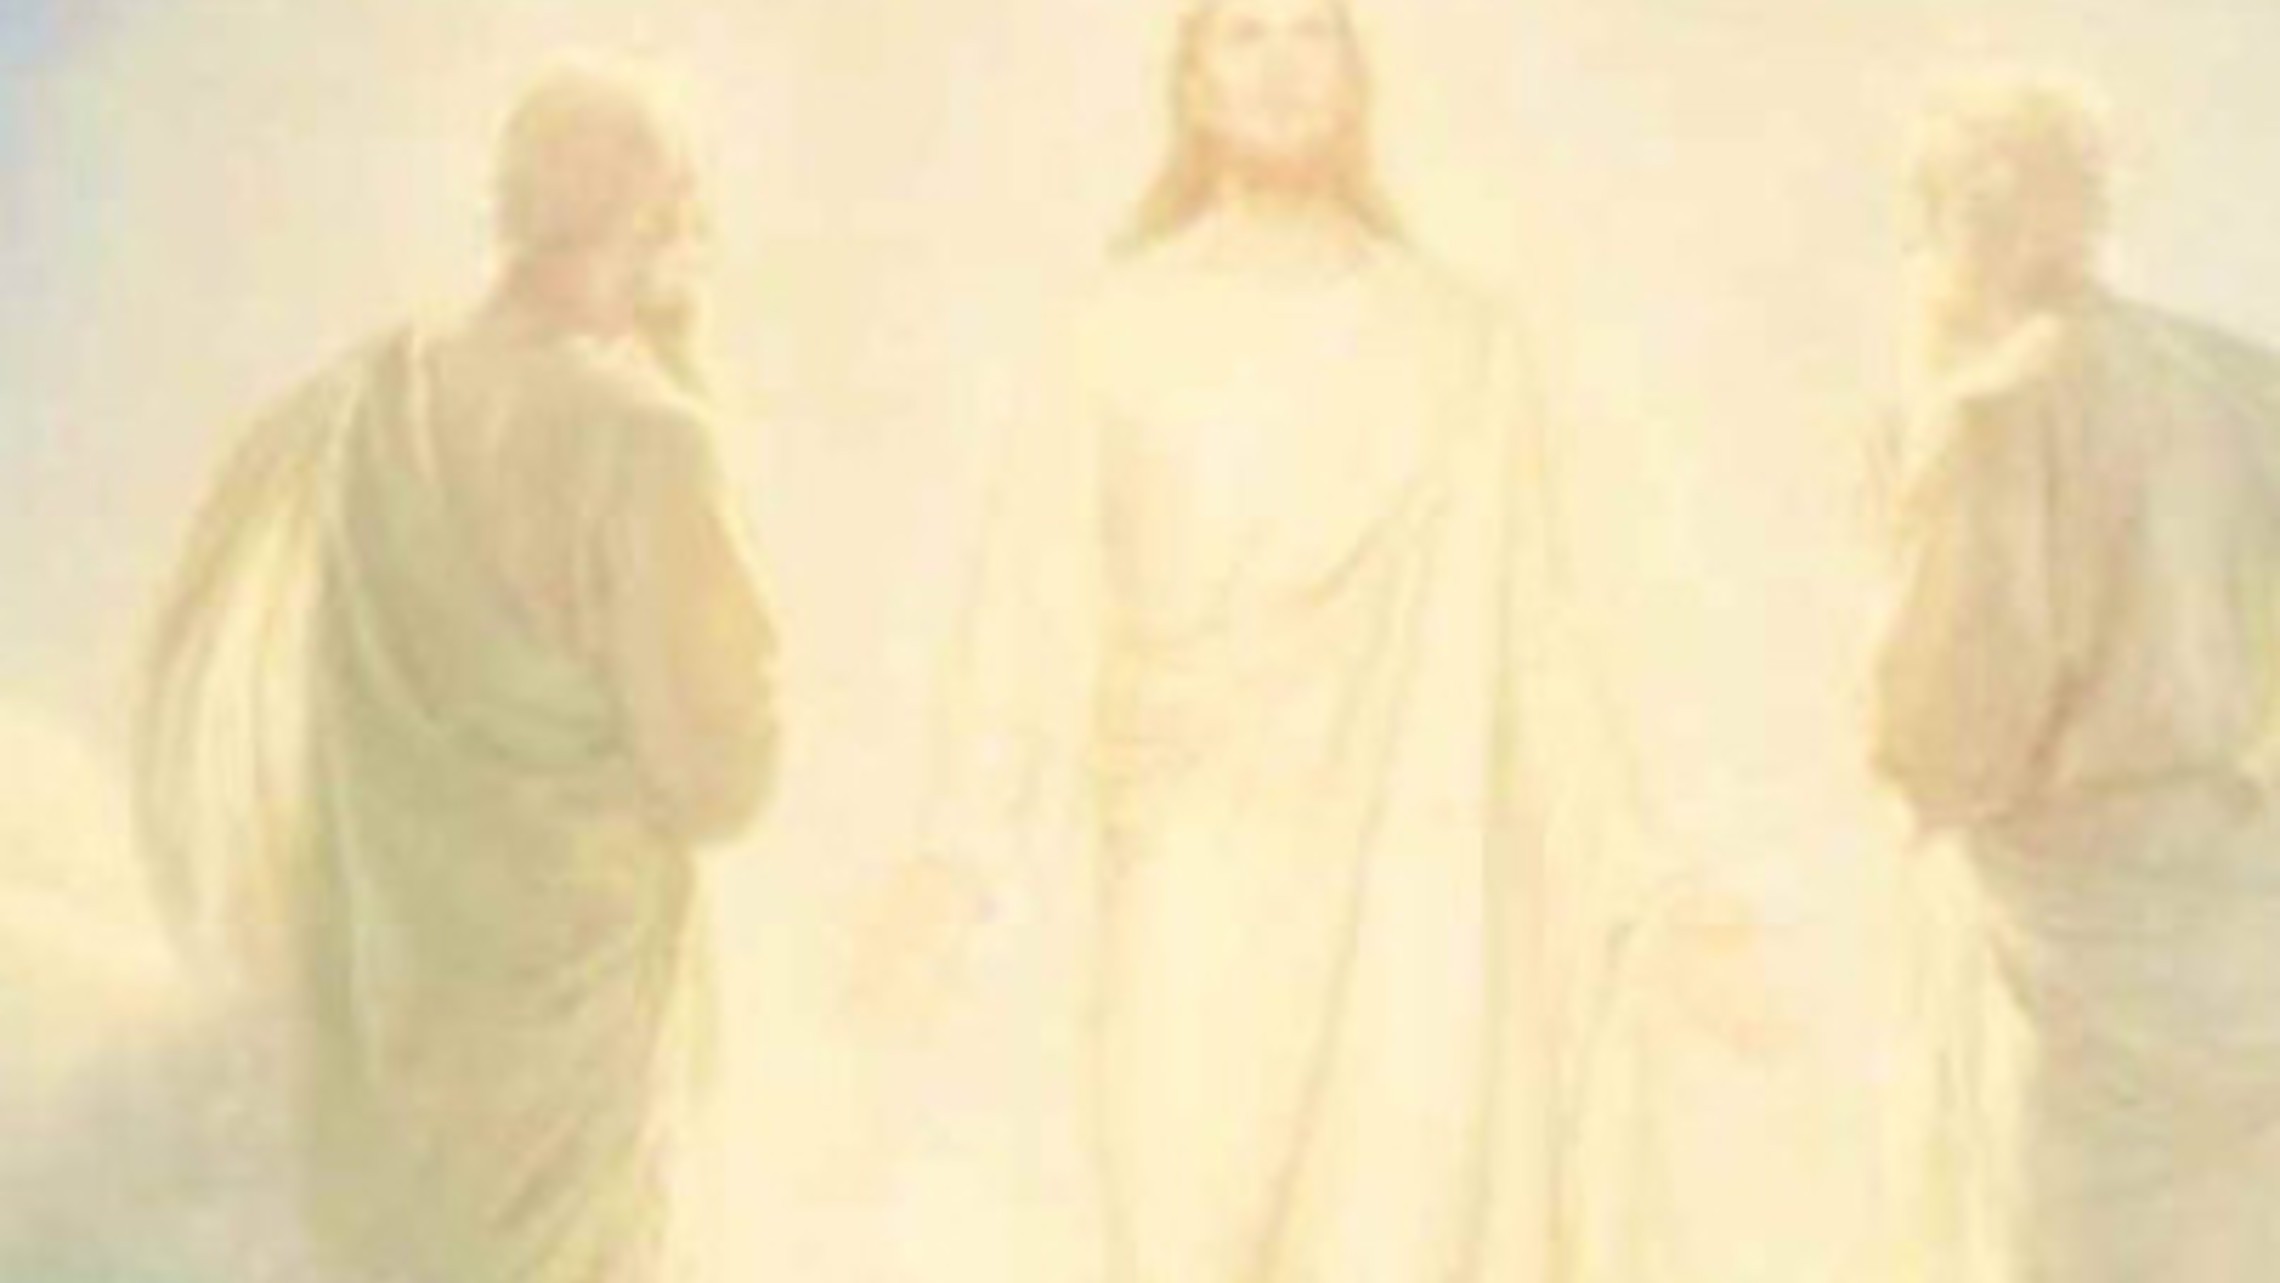 Transfiguration Rejig